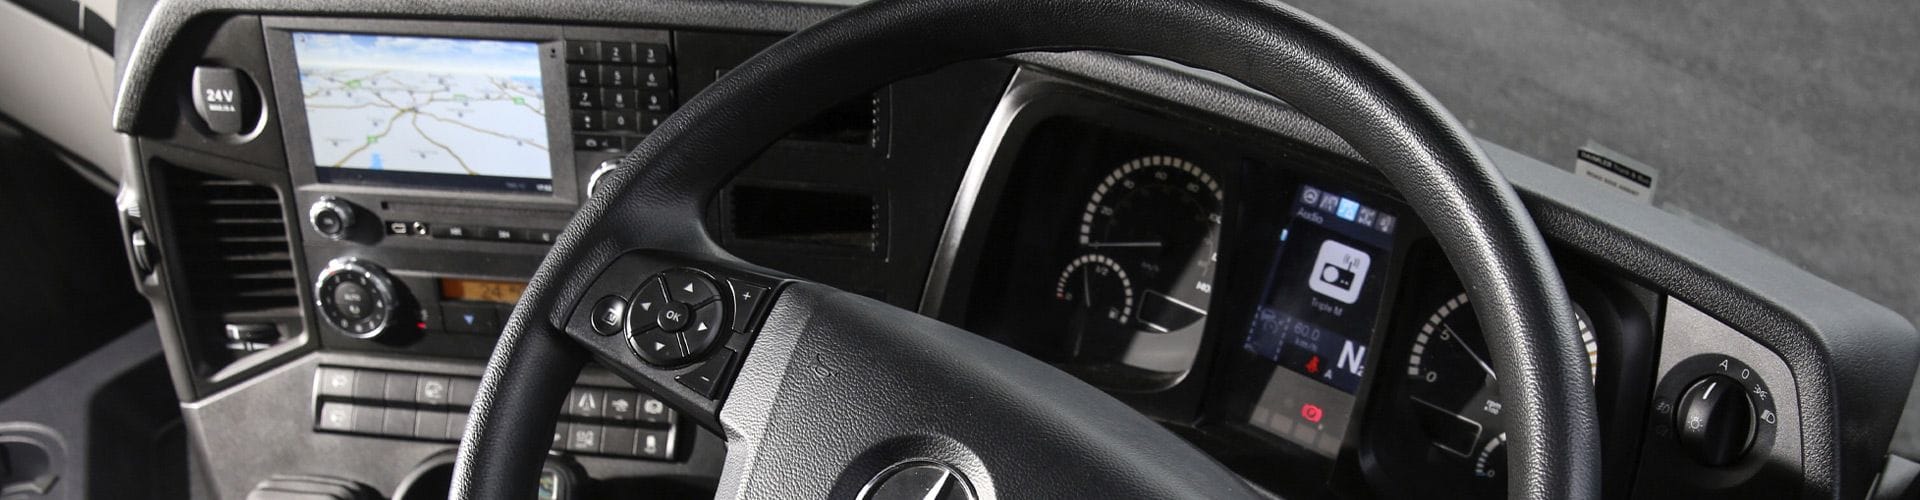 Mercedes-benz Atego | Daimler Trucks Albury & Wagga Wagga